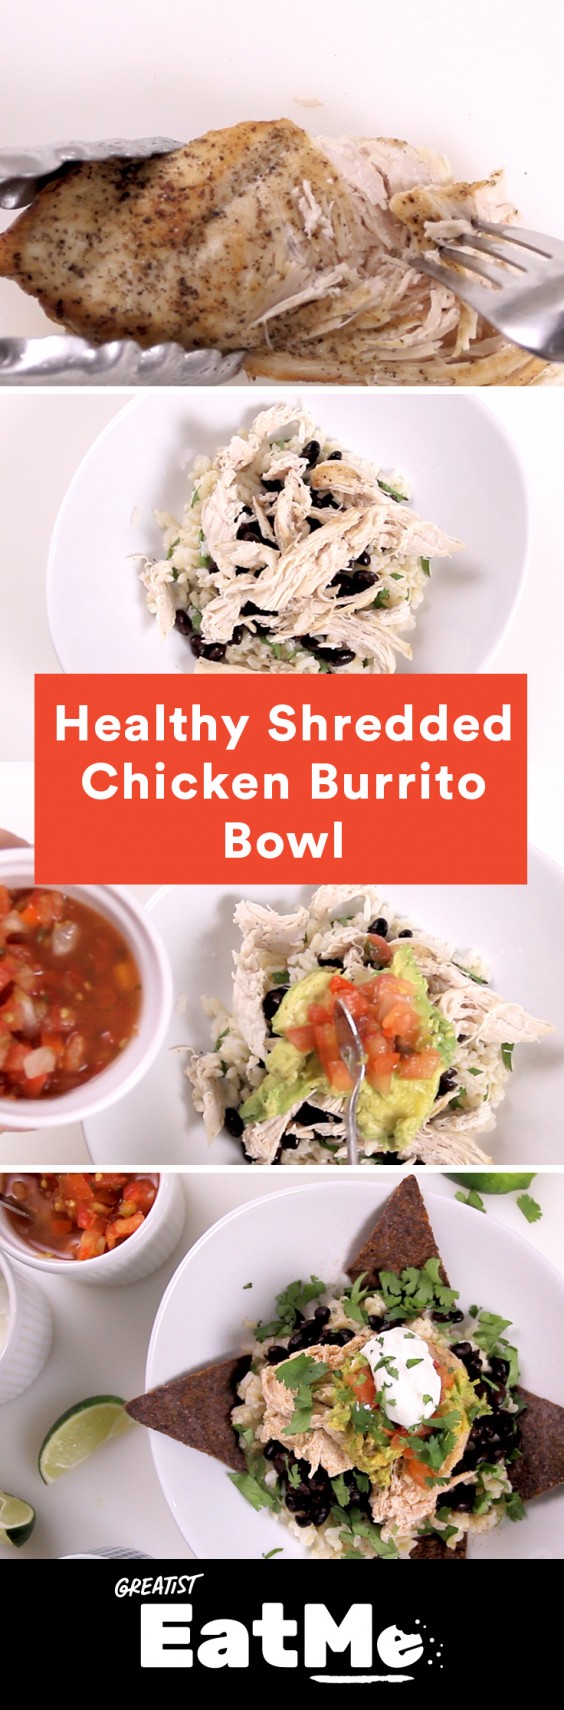 Eat Me Video: Chicken Burrito Bowl